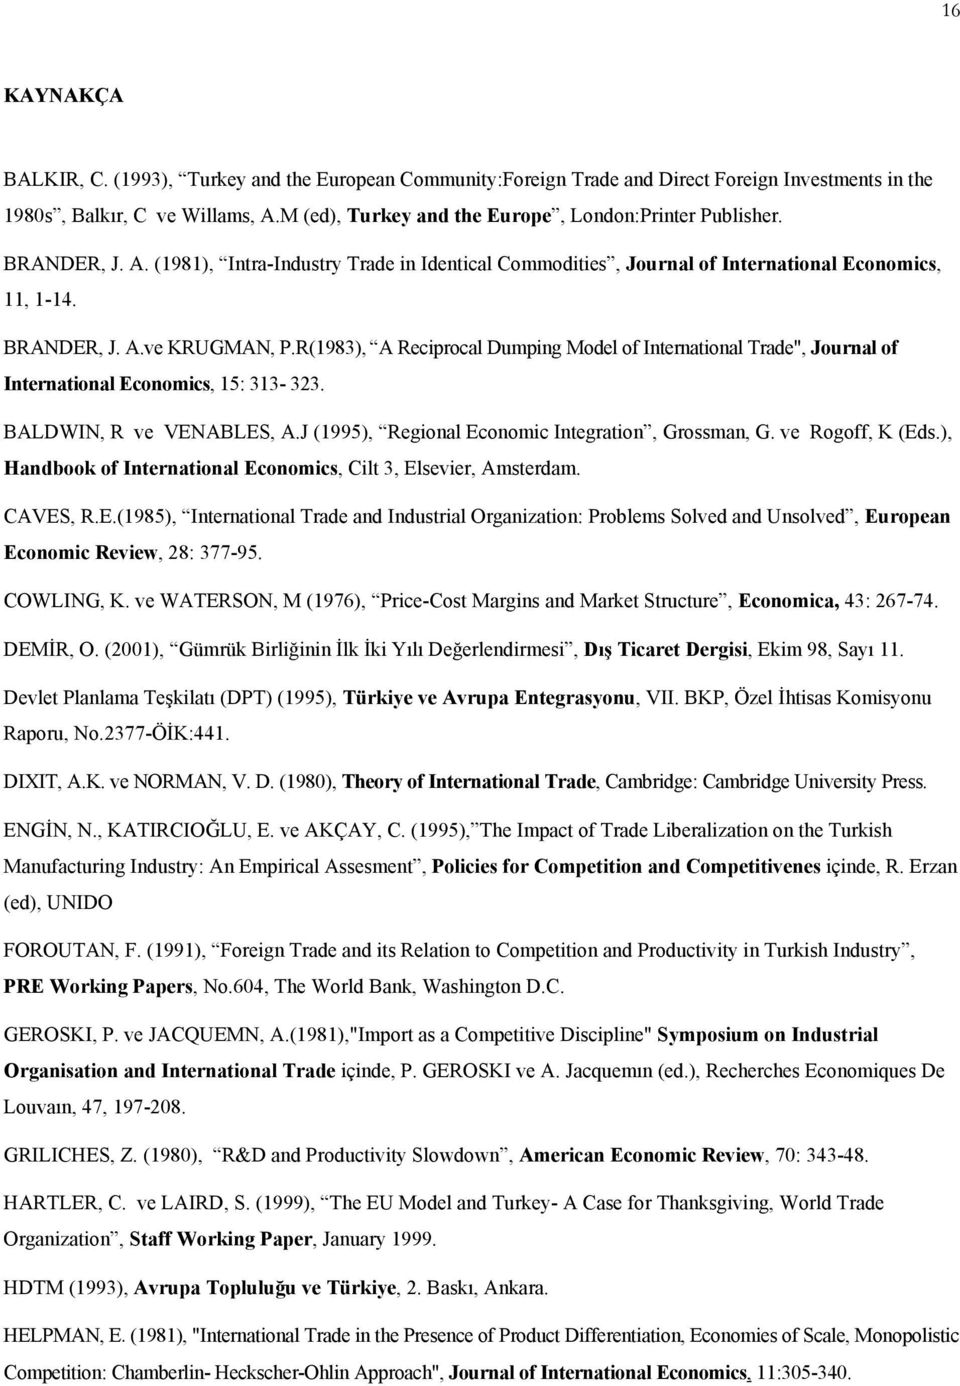 R(1983), A Reciprocal Dumping Model of International Trade", Journal of International Economics, 15: 313-323. BALDWIN, R ve VENABLES, A.J (1995), Regional Economic Integration, Grossman, G.